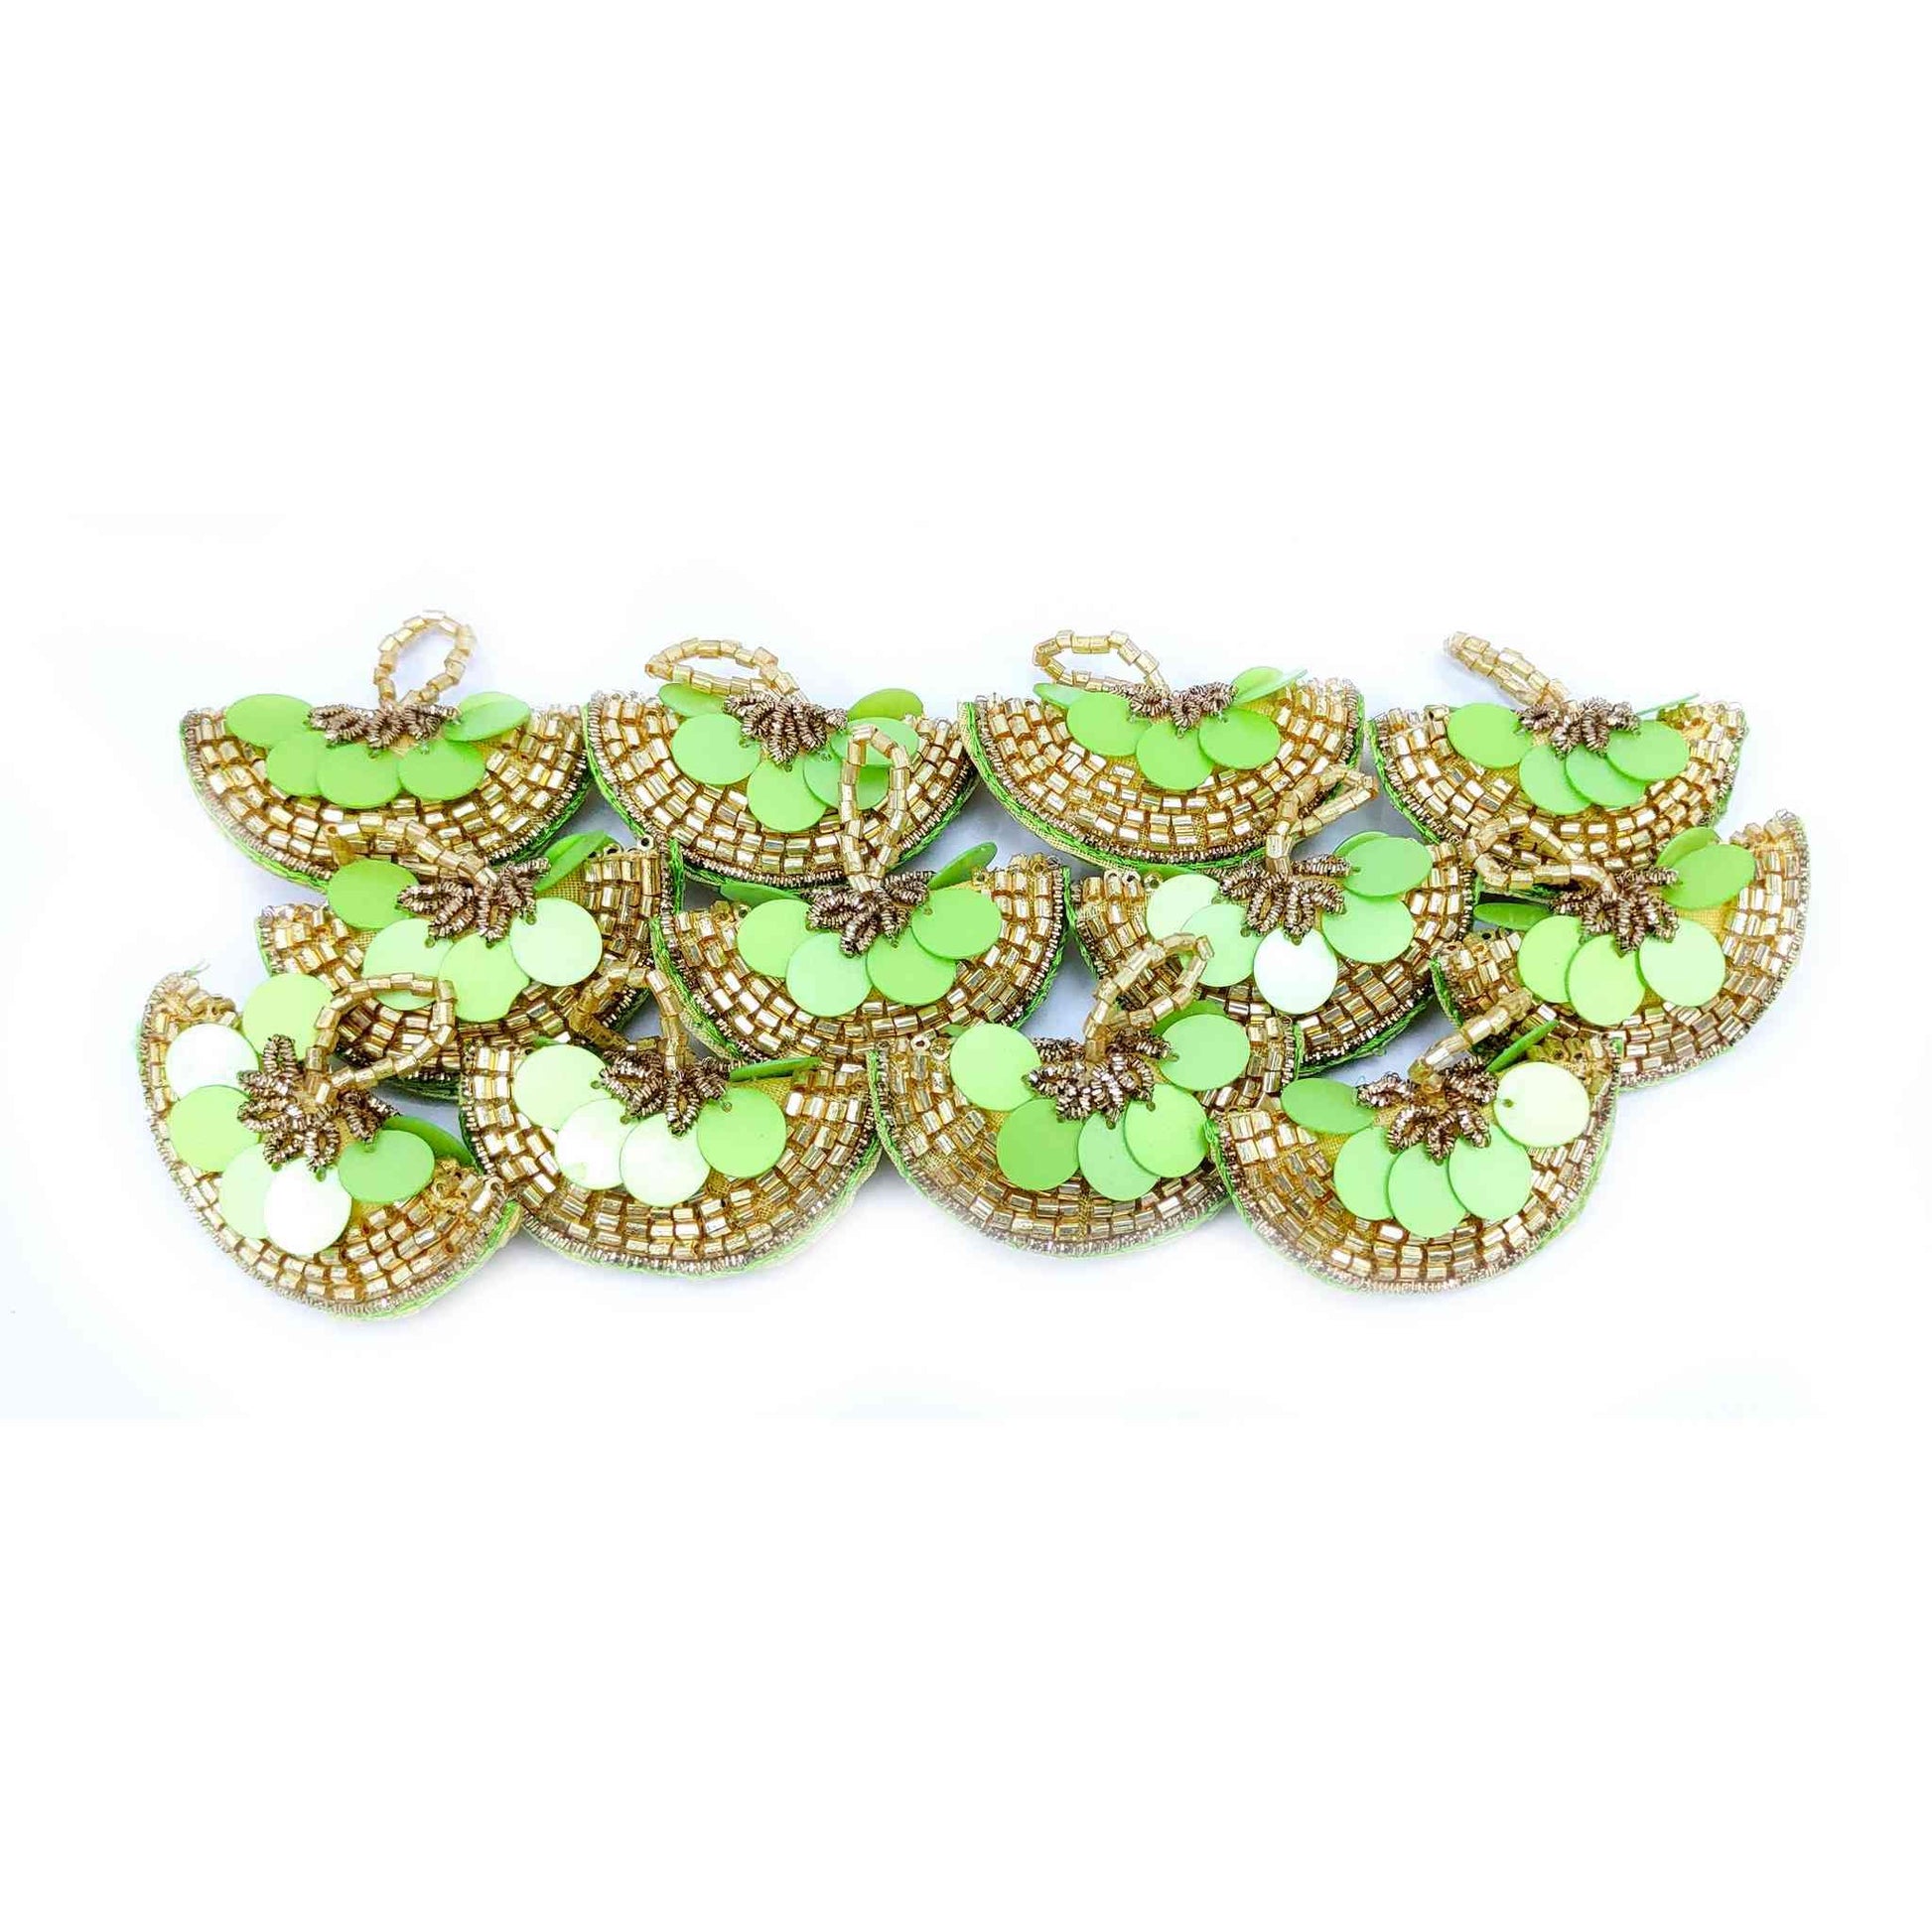 Indian Petals Designer Sequence Latkan Buti for DIY Craft, Trouseau Packing or Decoration (Bunch of 12) - Design 201, Light Green - Indian Petals